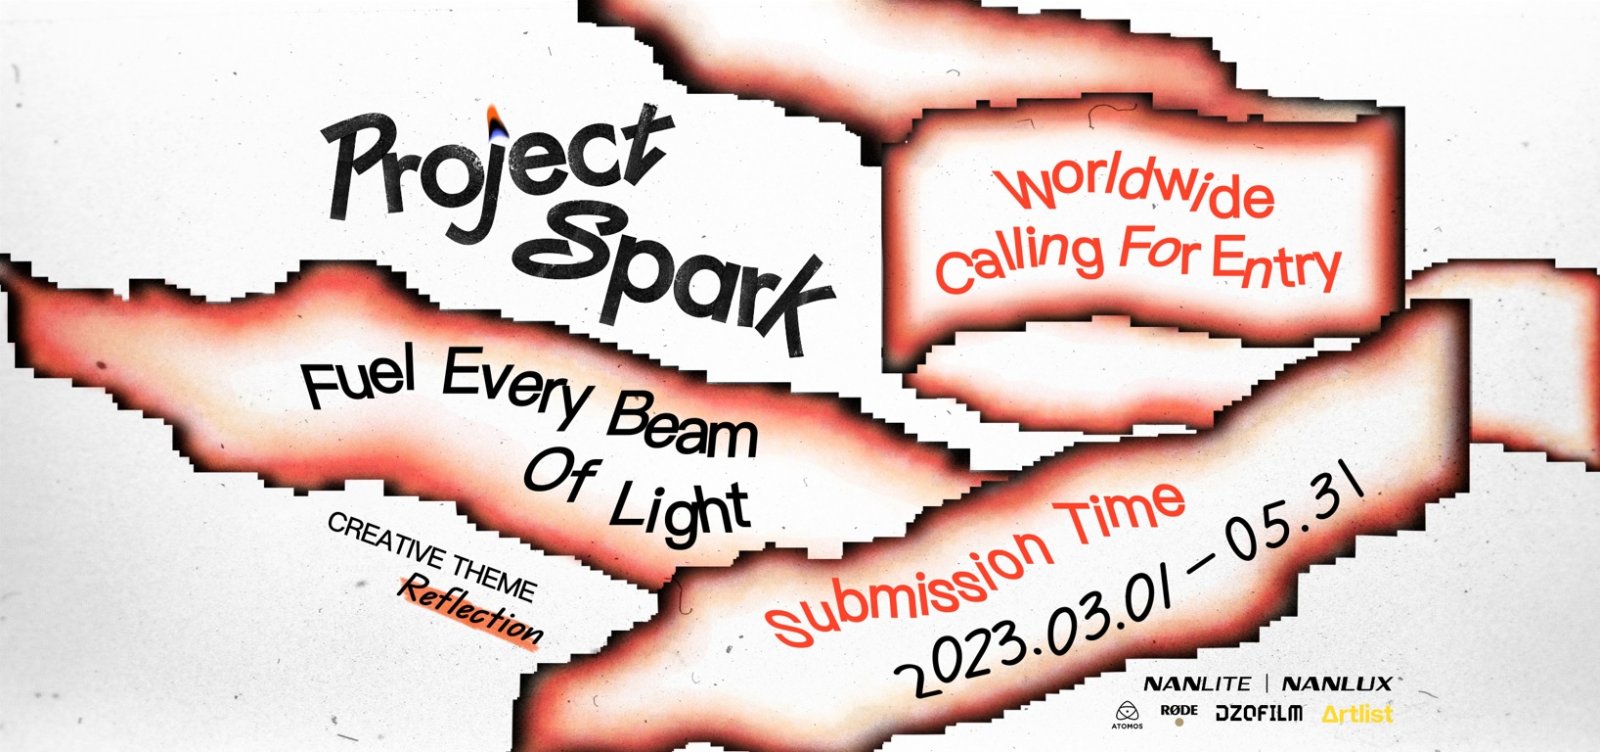 project spark 2023.jpg